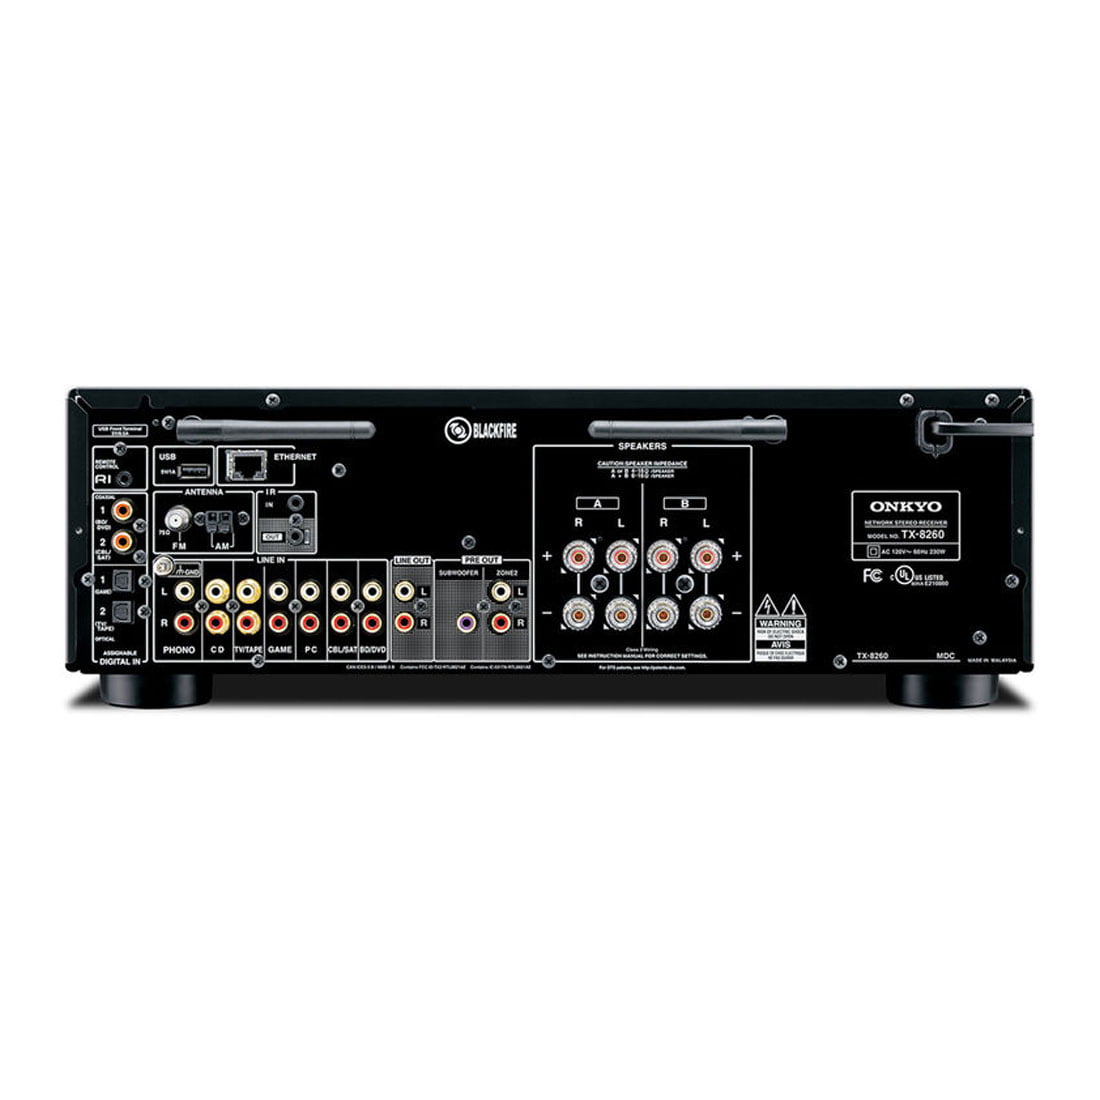 Onkyo TX-8260 Network Home Audio/Video Stereo Receiver - Black